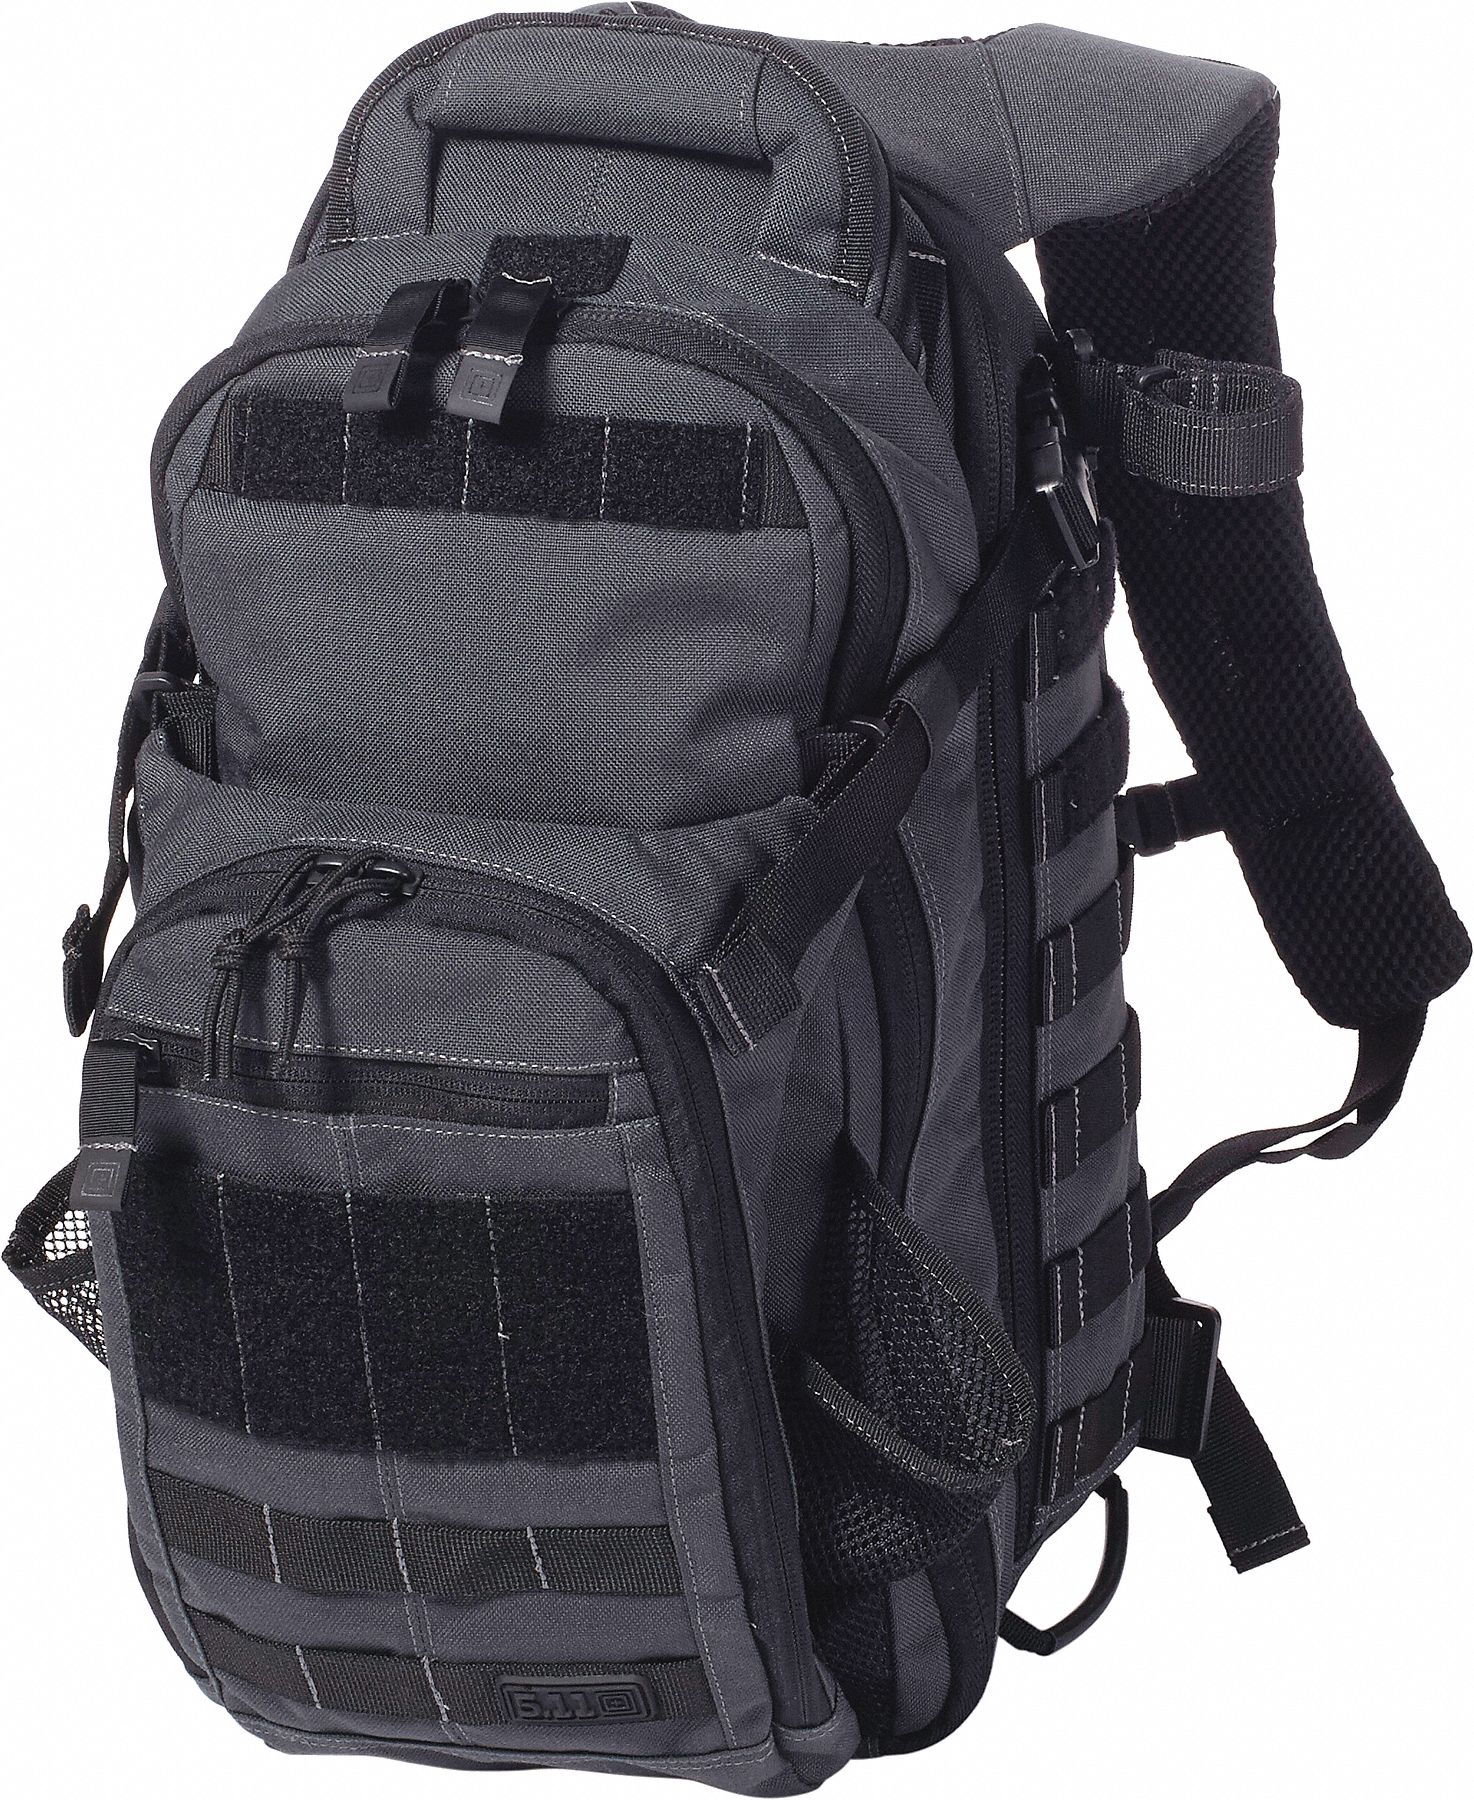 5.11 TACTICAL, Gray, All Hazards Nitro Backpack - 32JV81|56167 